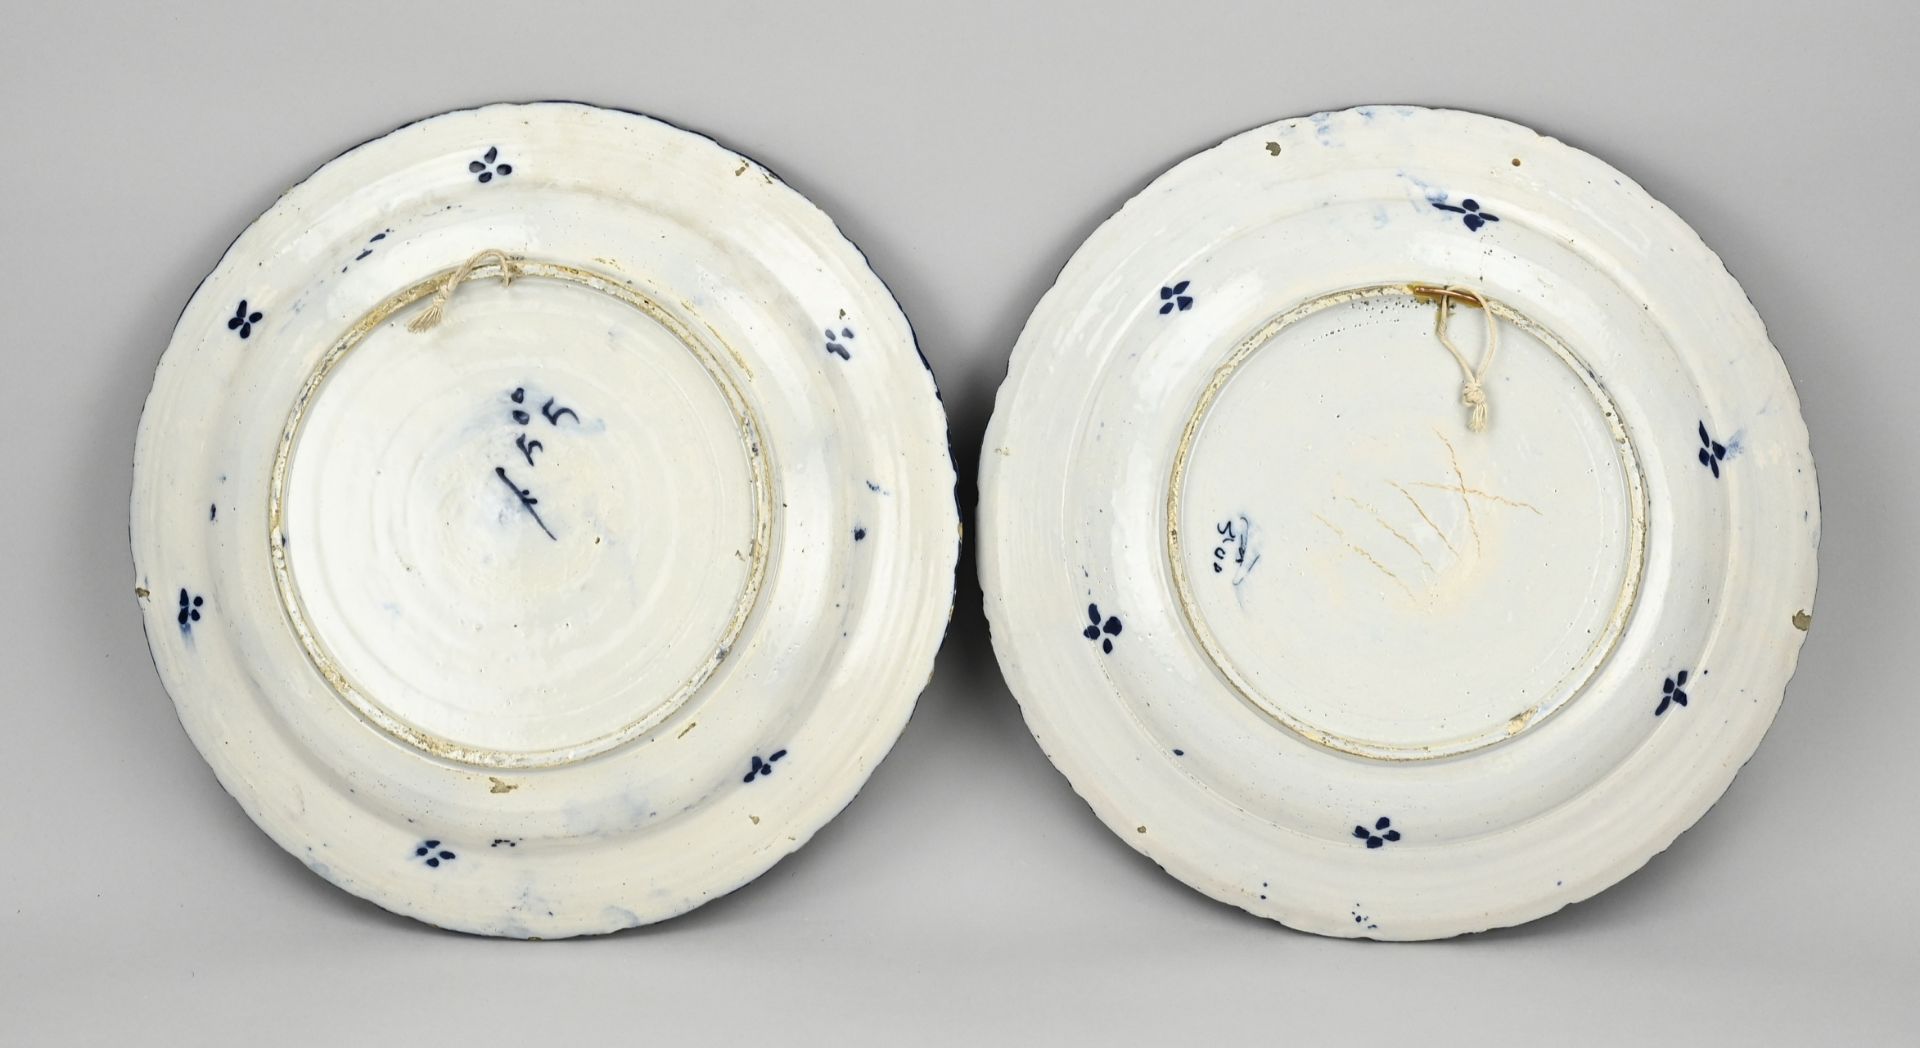 2x Delft dish Ã˜ 35 cm. - Image 2 of 2